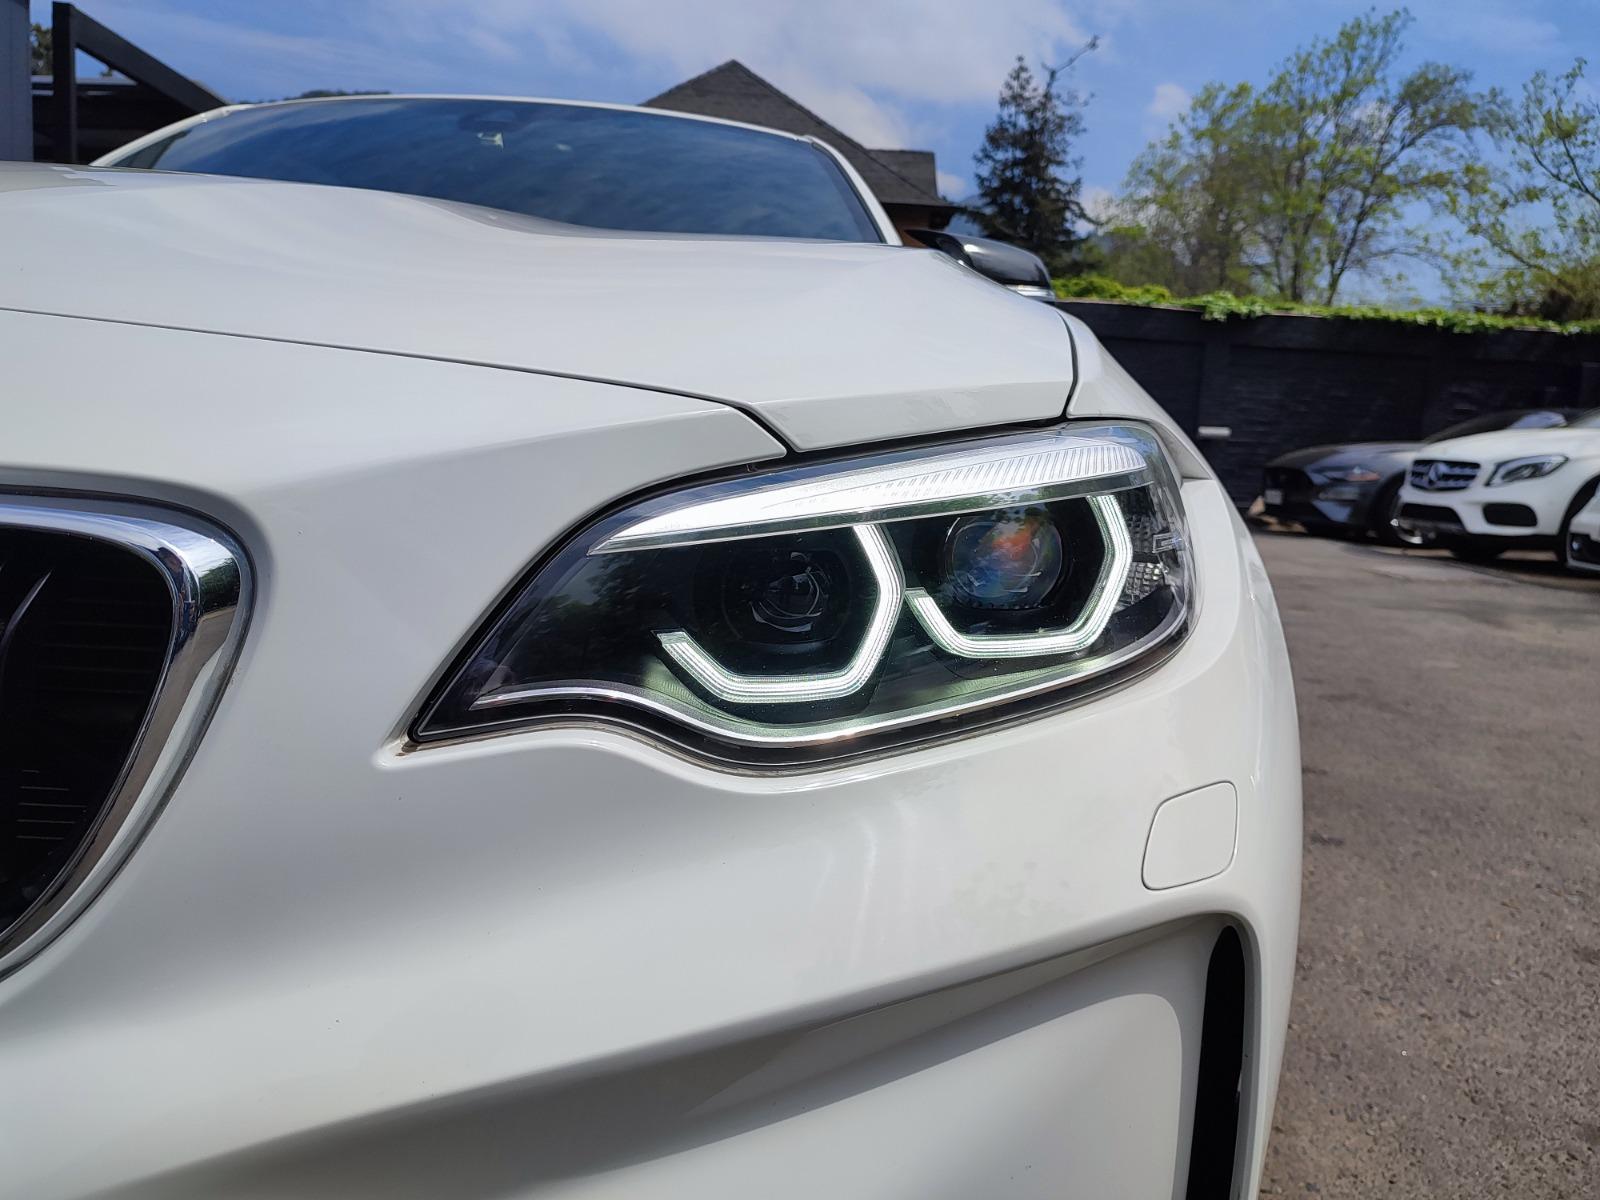 BMW M2 3.0 TWIN TURBO COUPE 2019 ECU TUNNING, MANTENCION RECIEN HECHA - K2 AUTOS